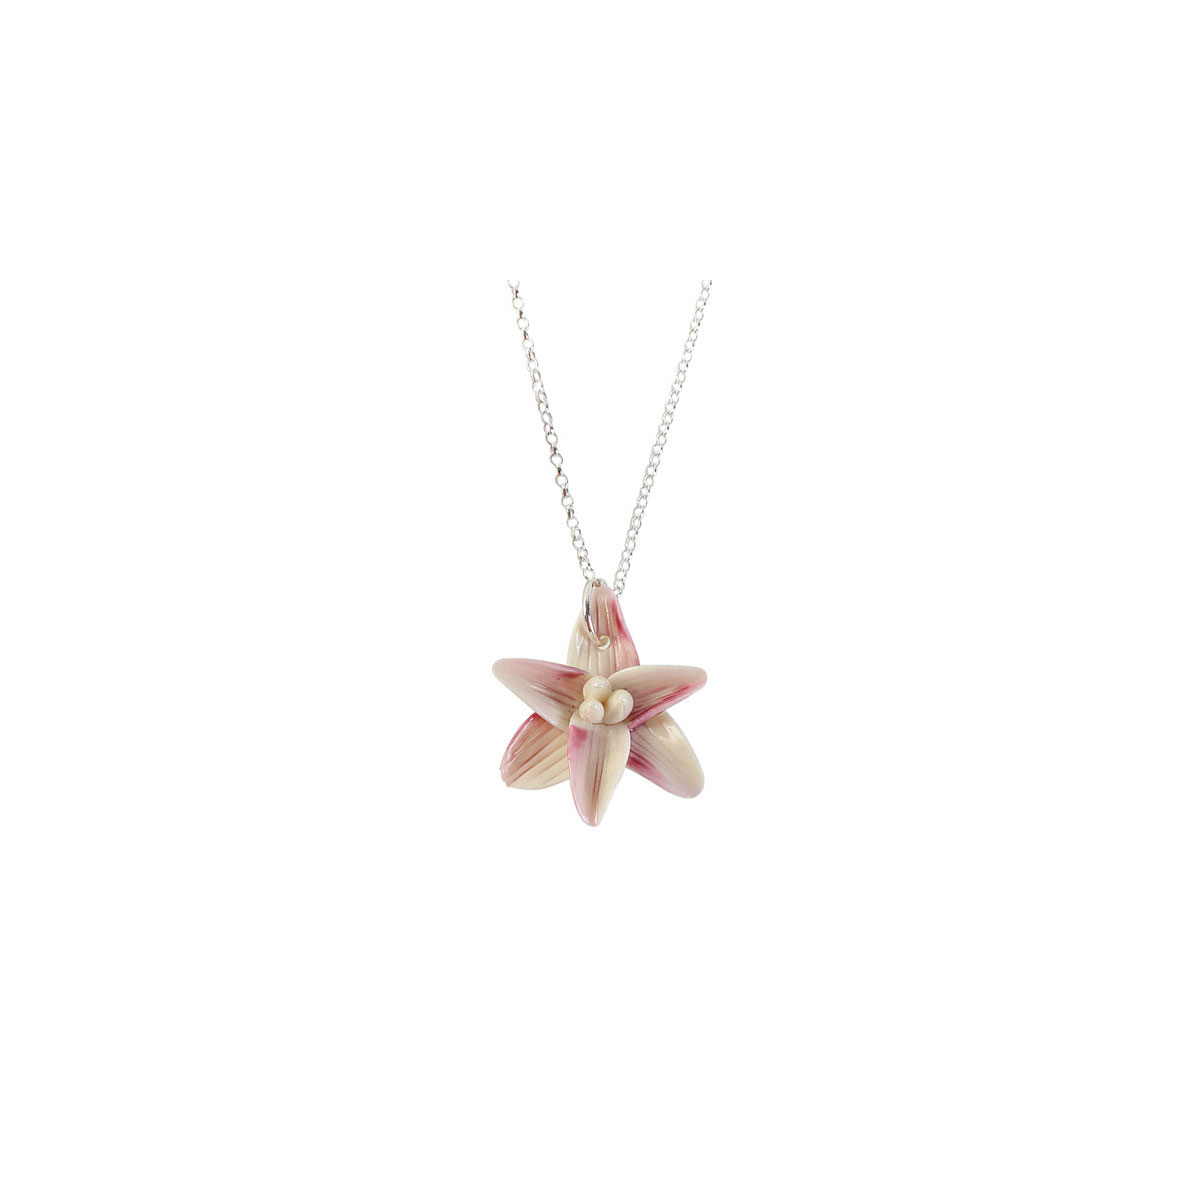 Belleek Porcelain Jewelry Freesia Necklace Pink